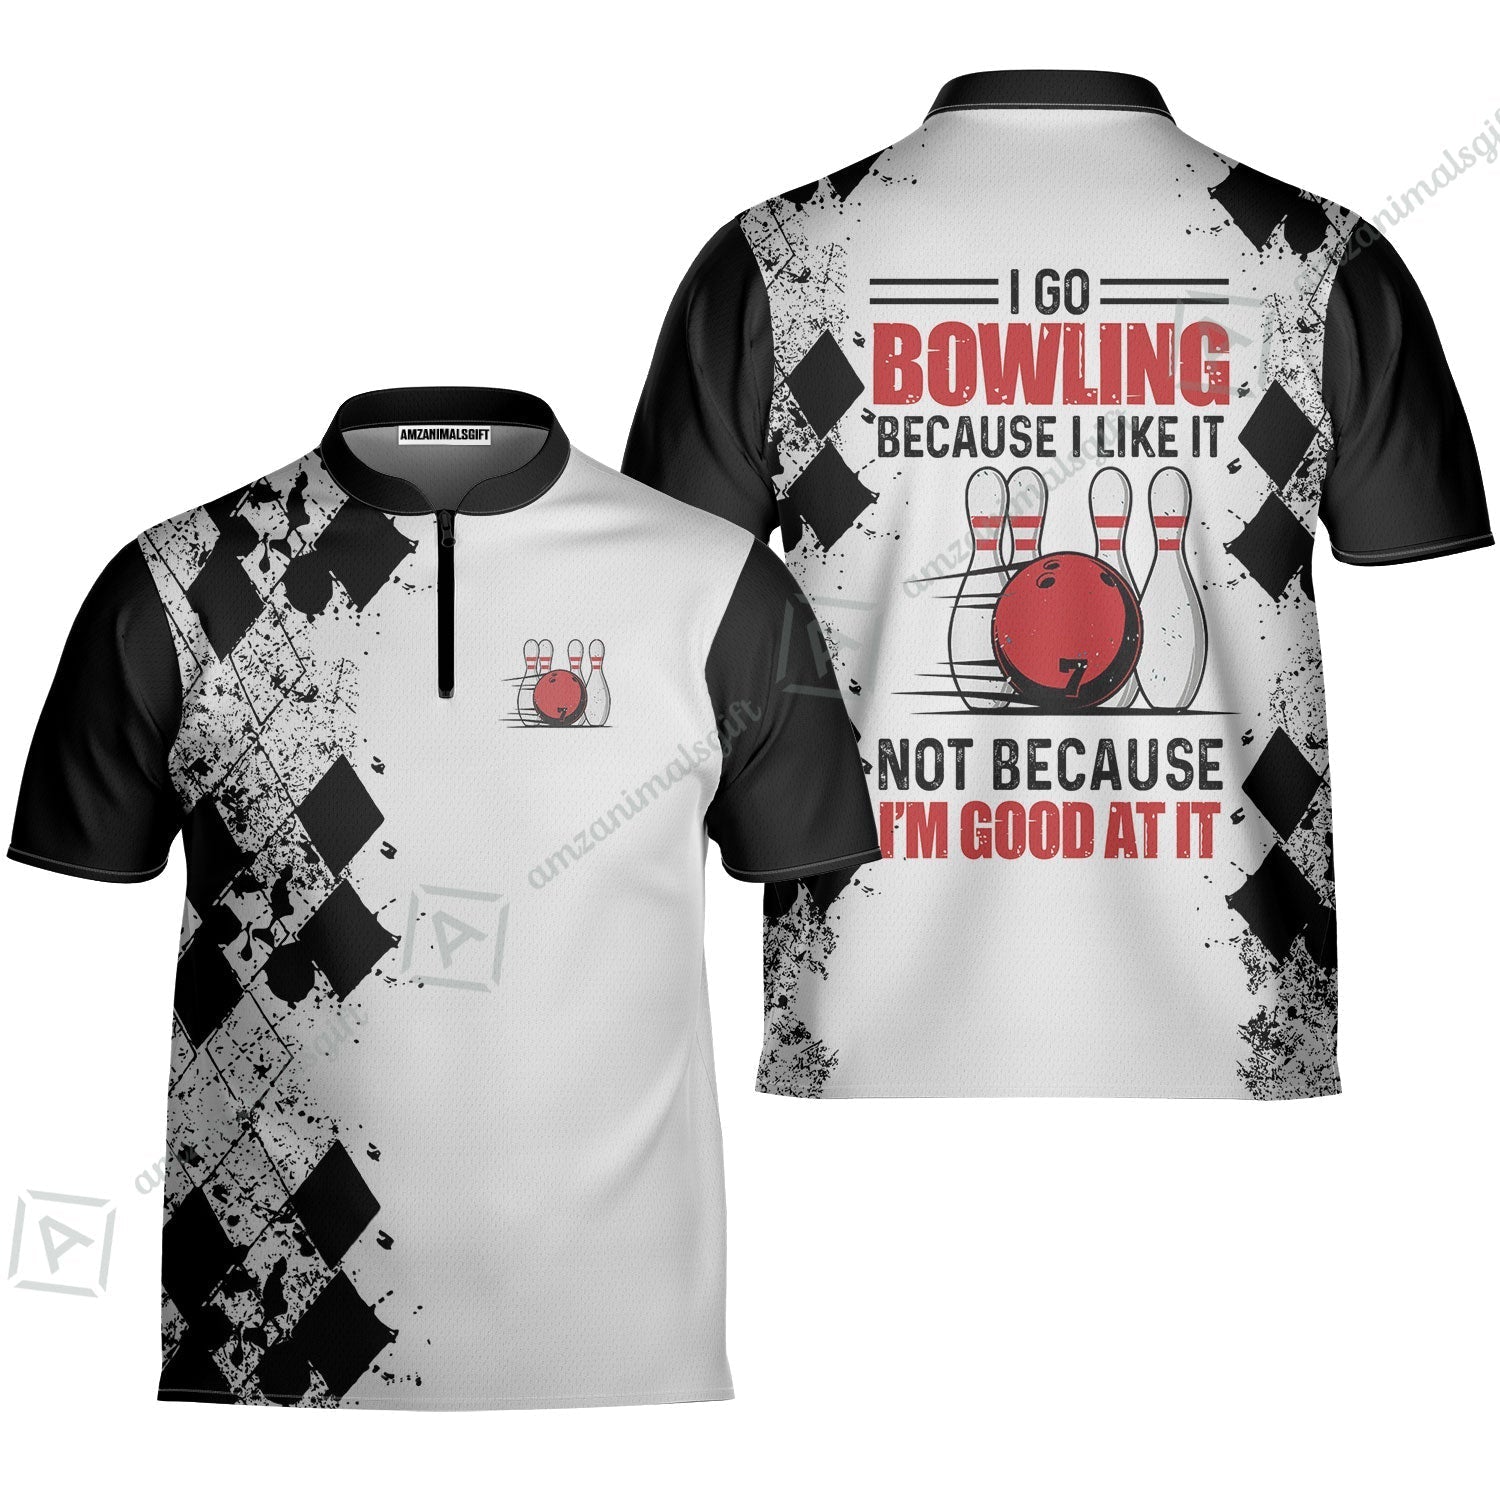 Bowling Jersey - I Go Bowling Because I Like It Bowling Jersey , Black Argyle Pattern Shirt Design, Best Bowling Shirt